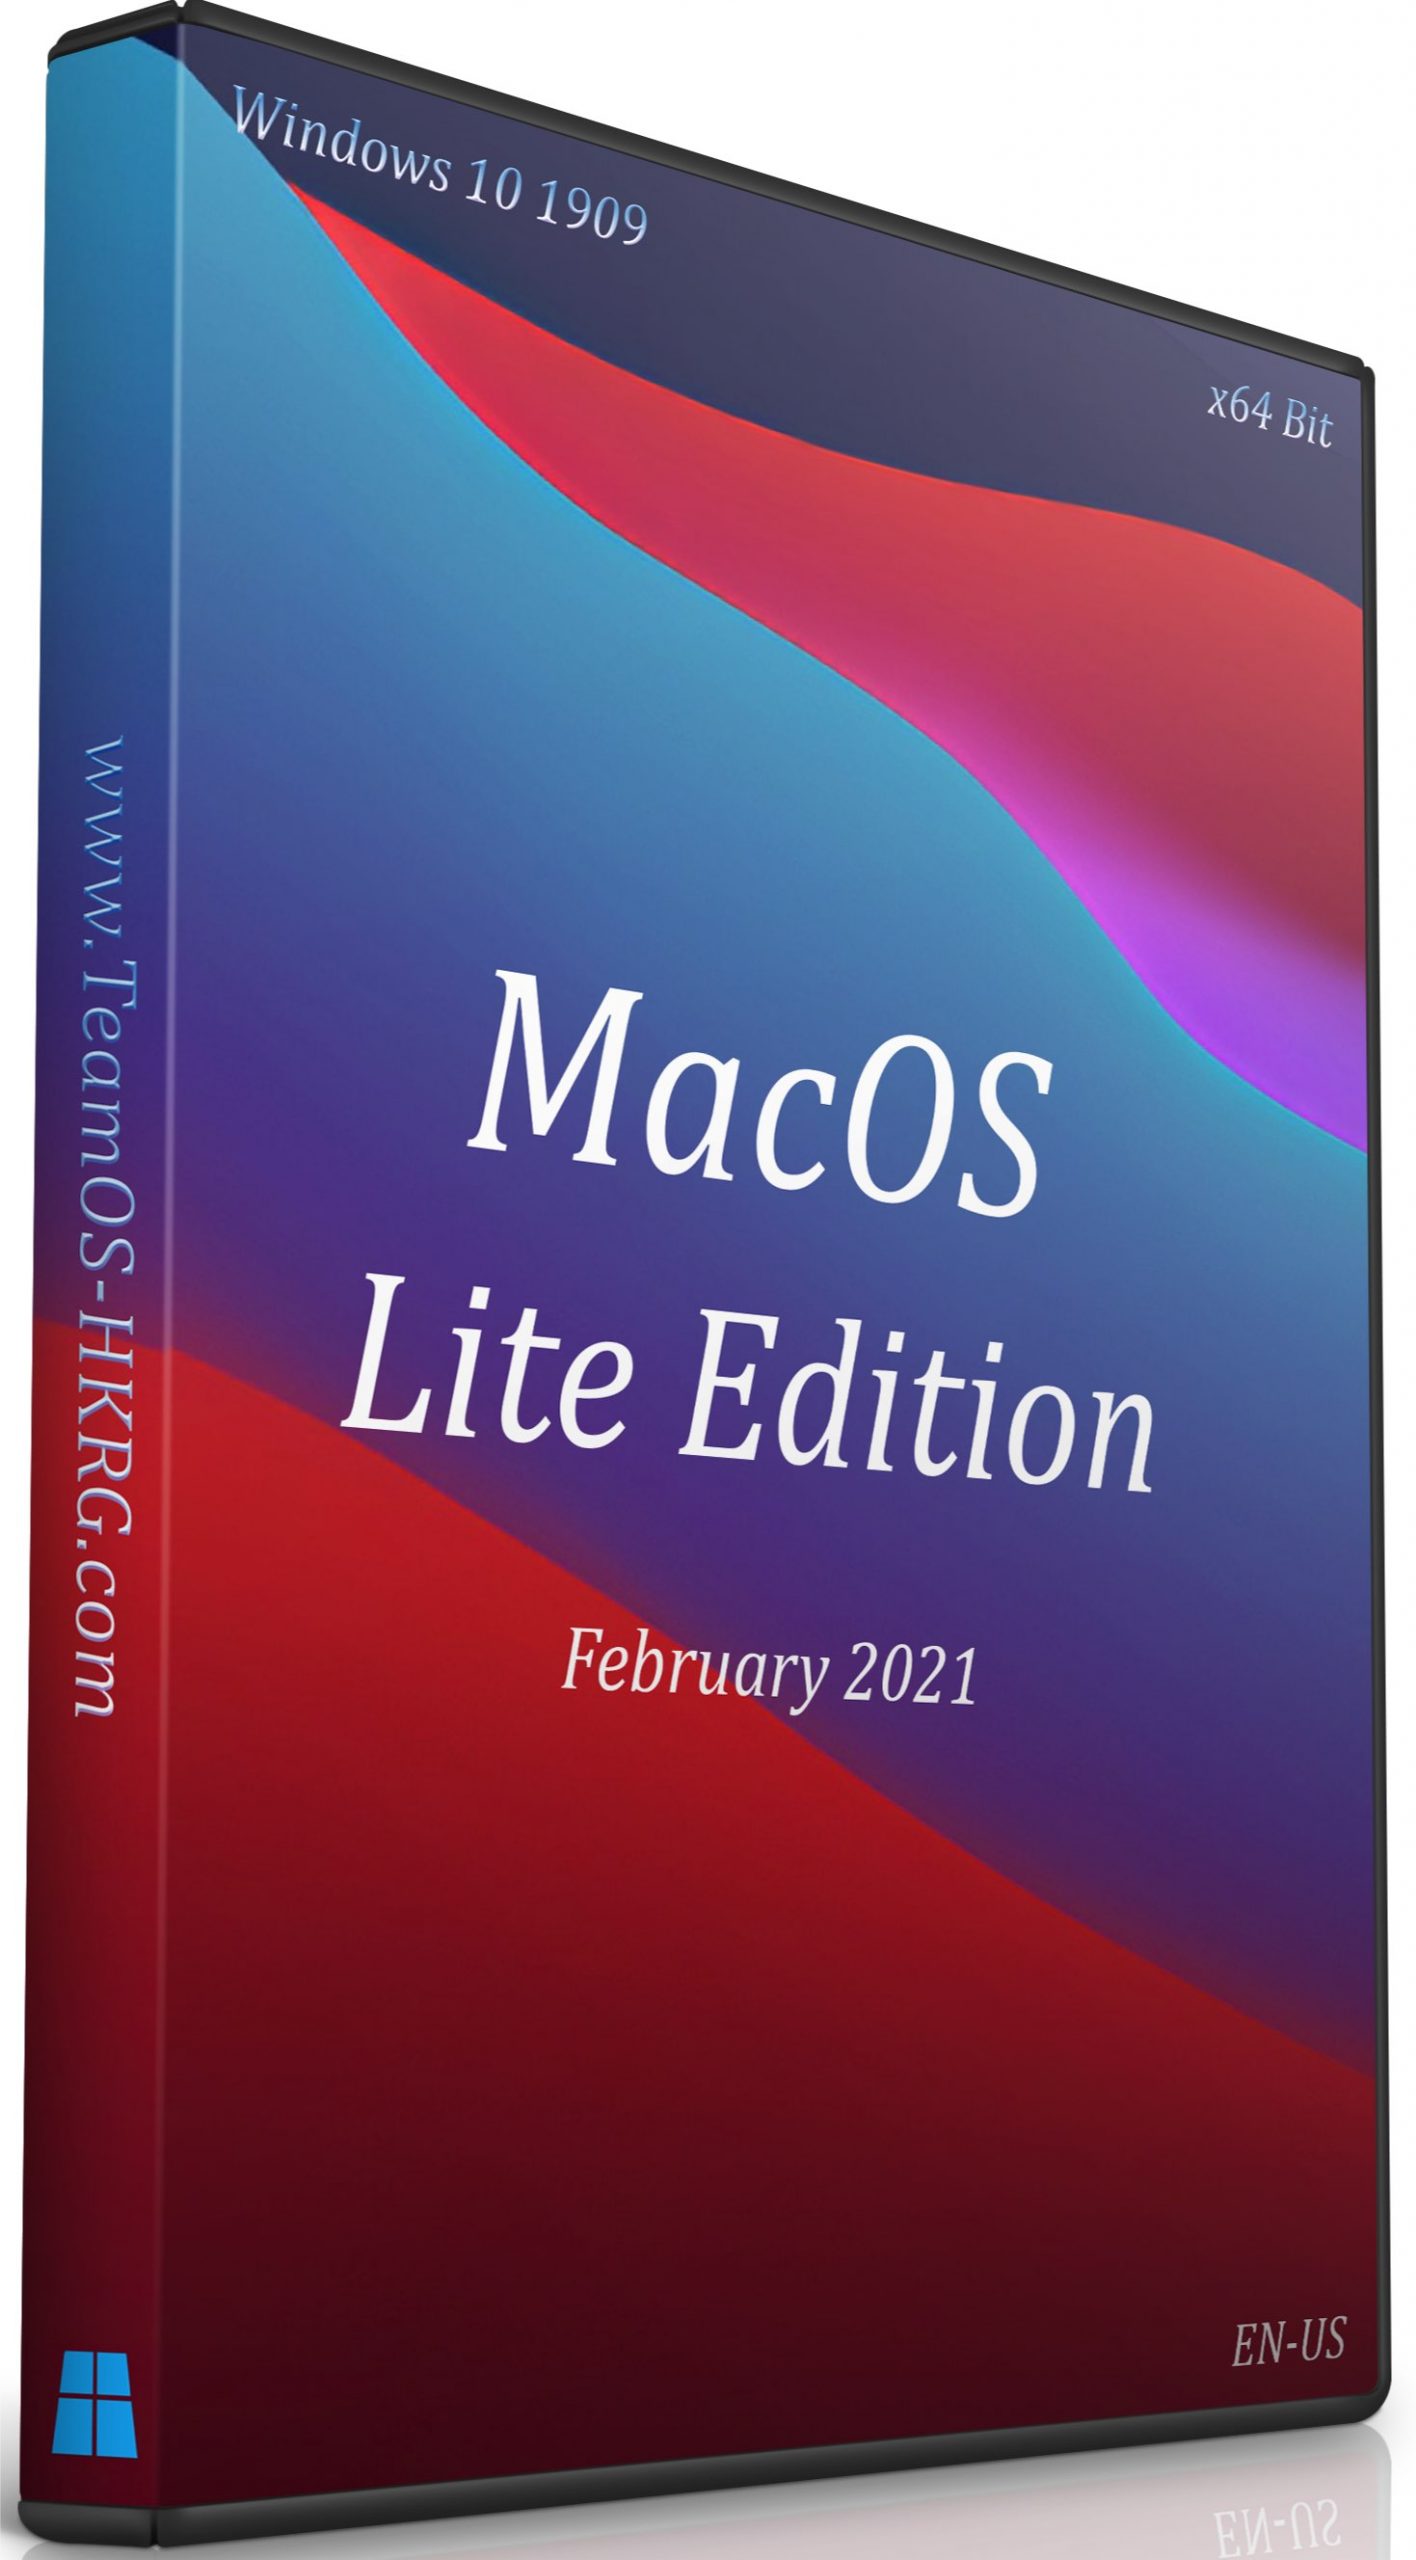 iso windows 10 for mac